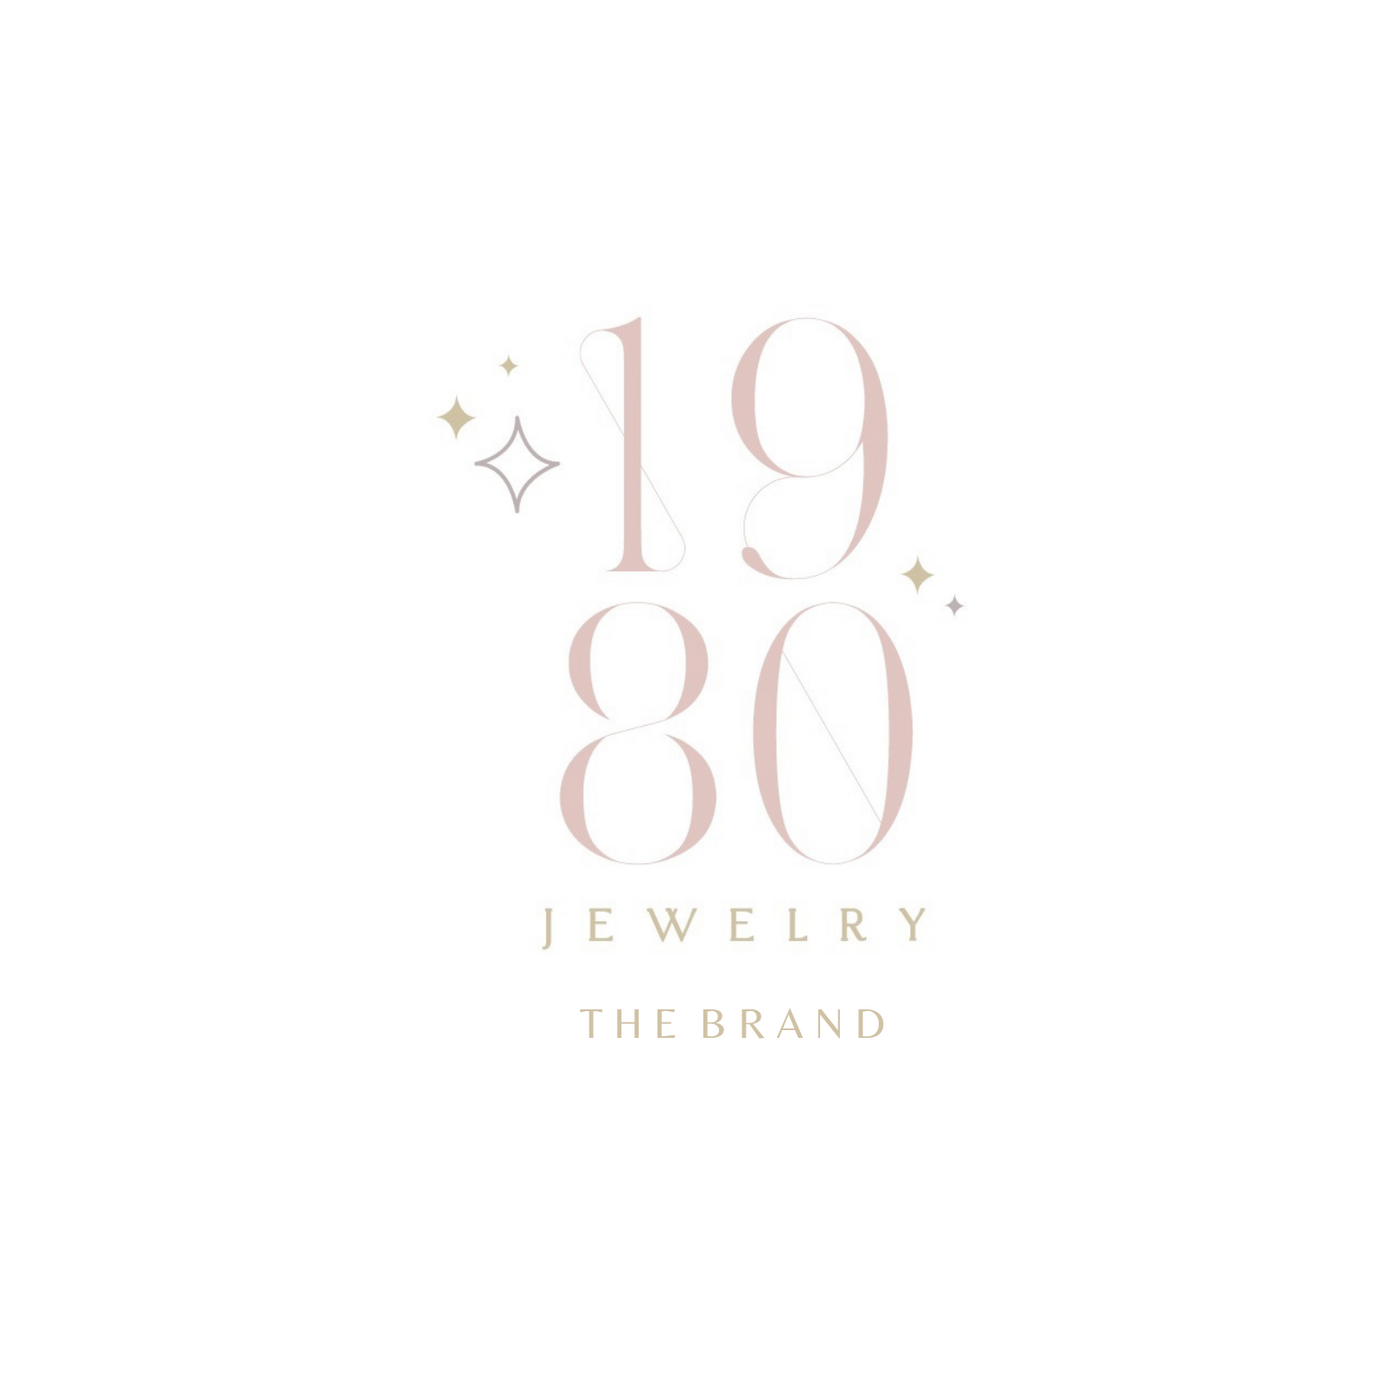 1980 Jewelry The Brand